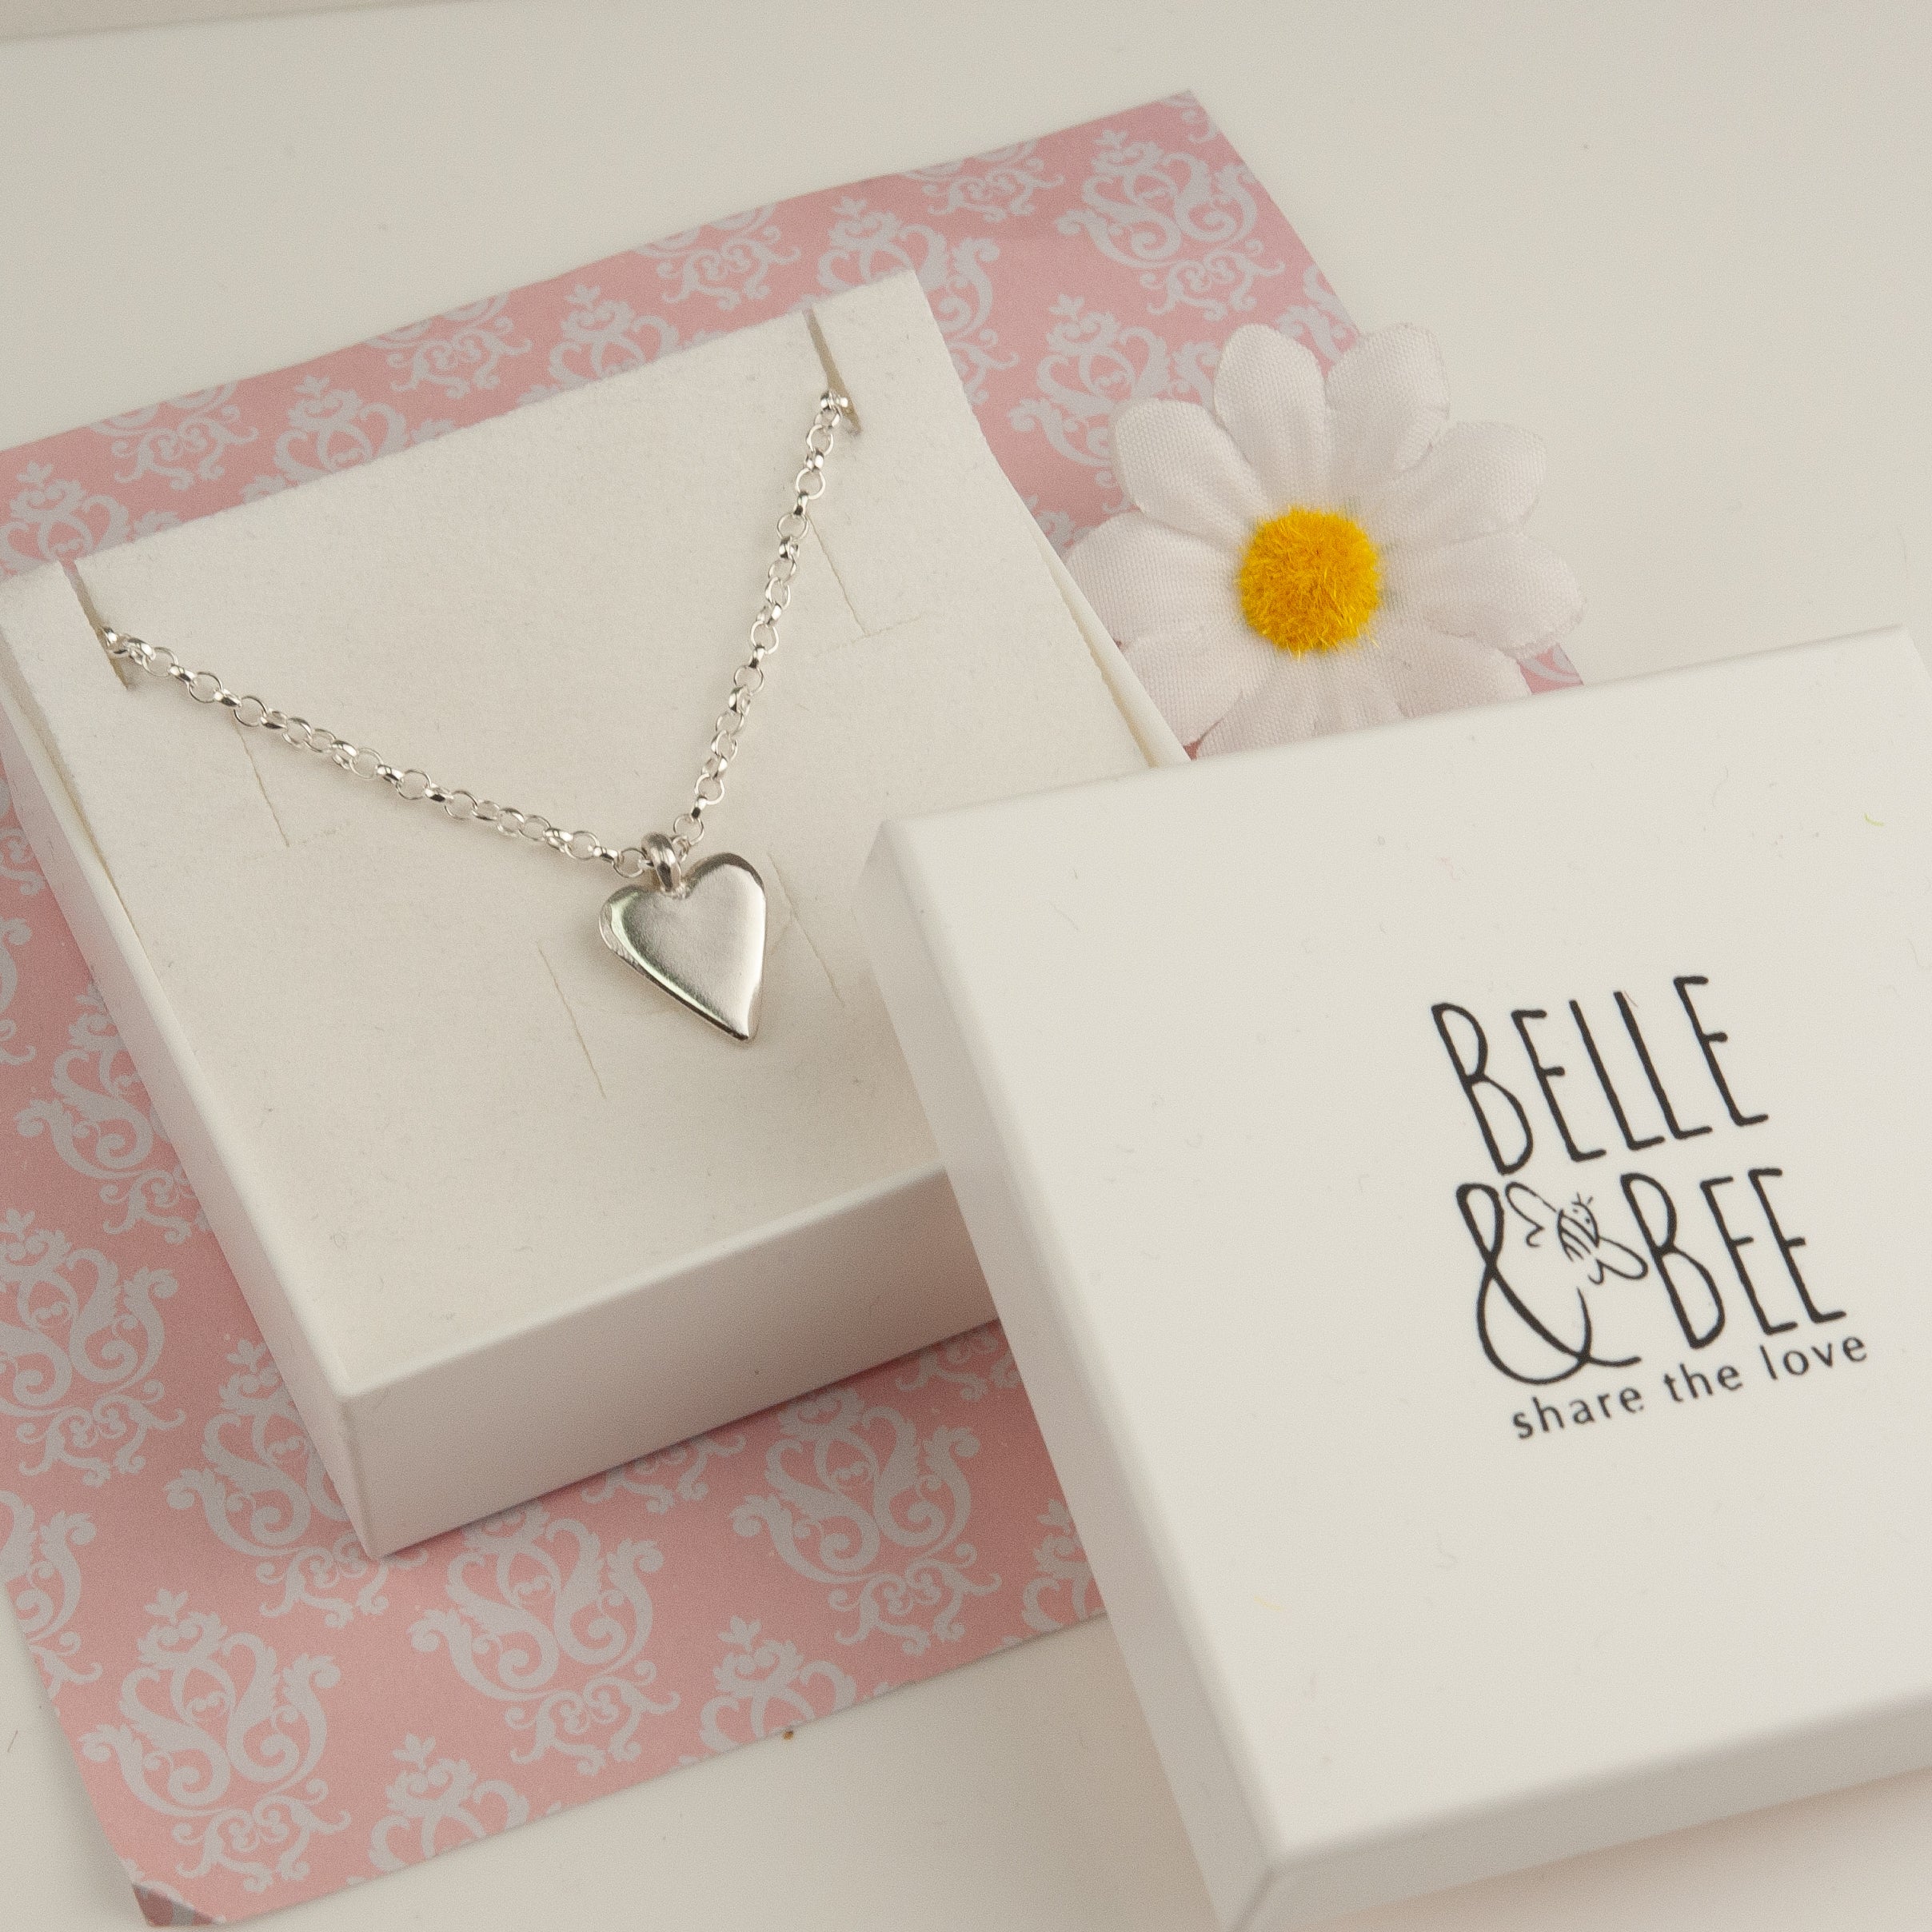 Belle & Bee Sterling silver heart necklace